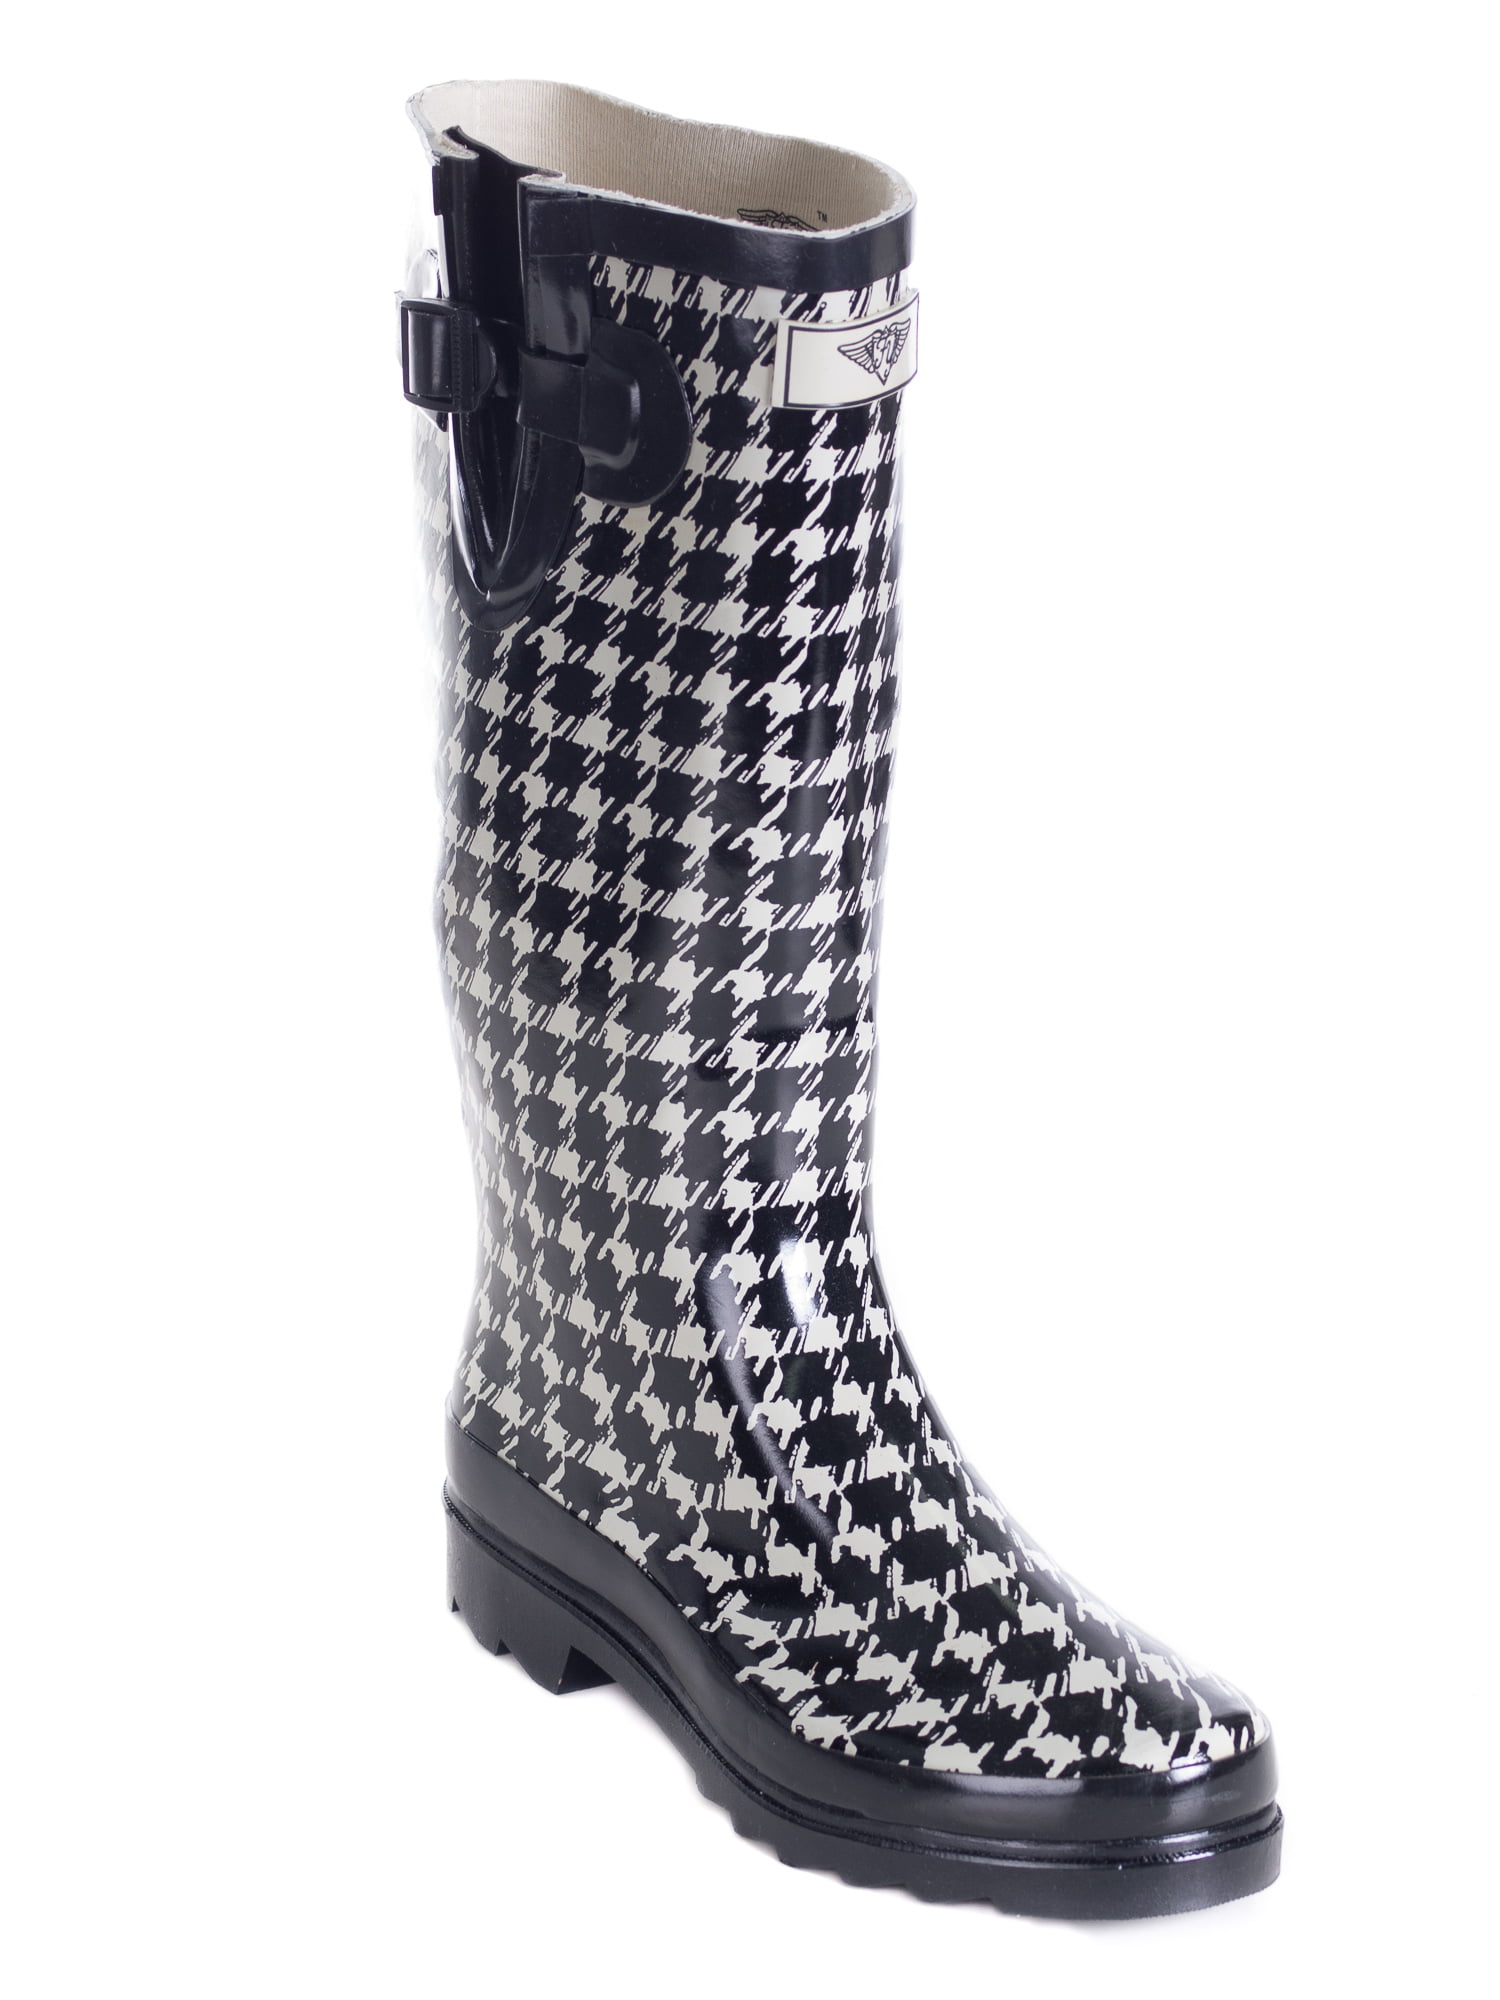 Women Rubber Rain Boots with Cotton Lining, Black/White Plaid - Walmart.com